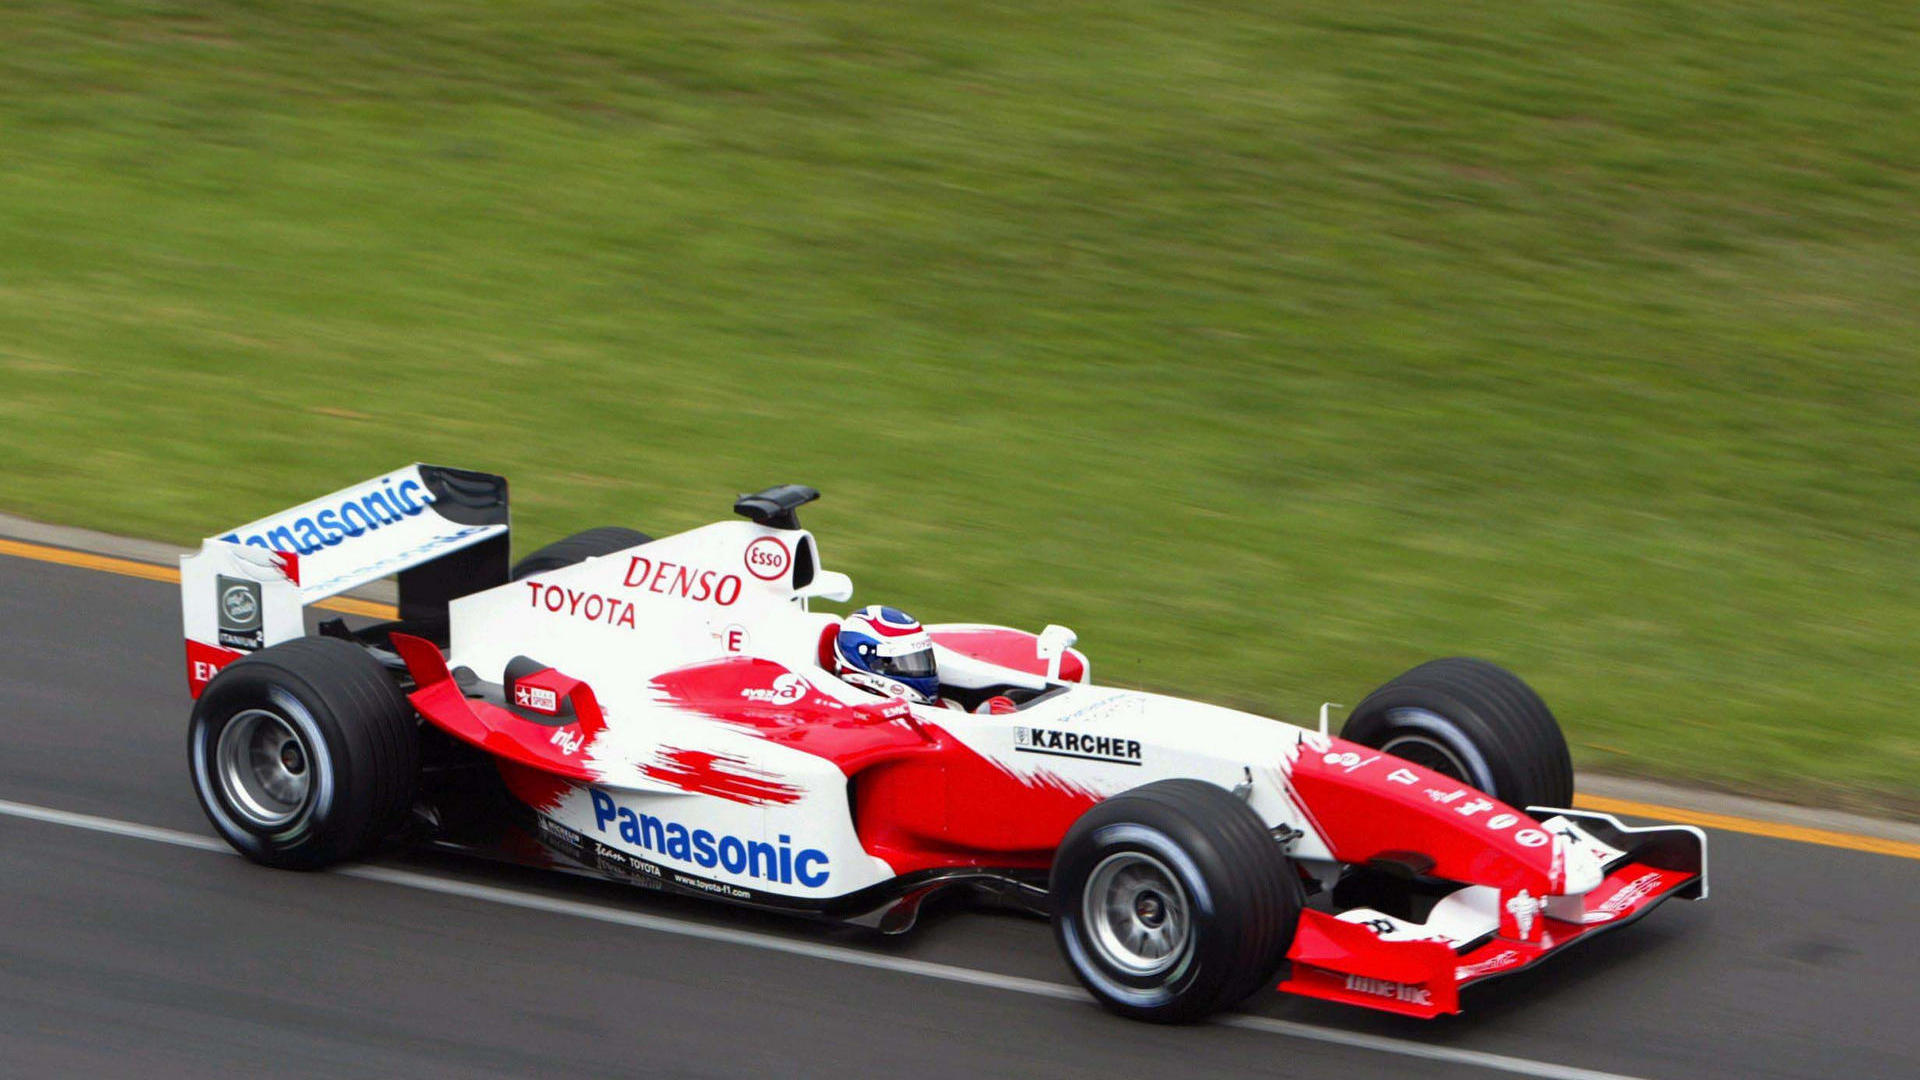 HD Wallpapers 2004 Formula 1 Grand Prix of Australia | F1 Fansite